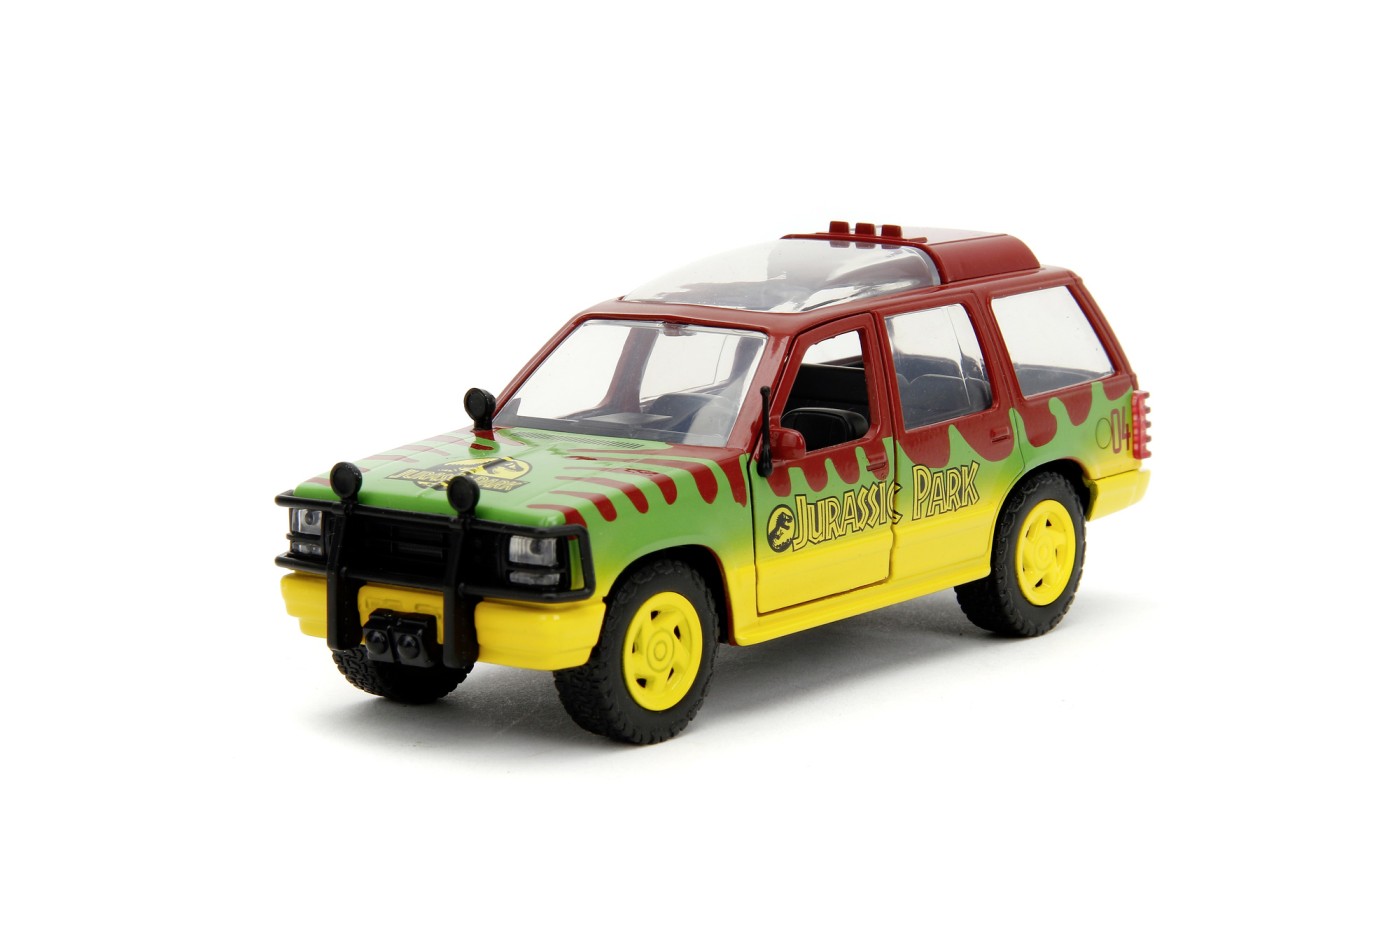 Masina - Jurassic Park 30th Anniversary - Ford Explorer | Jada Toys - 2